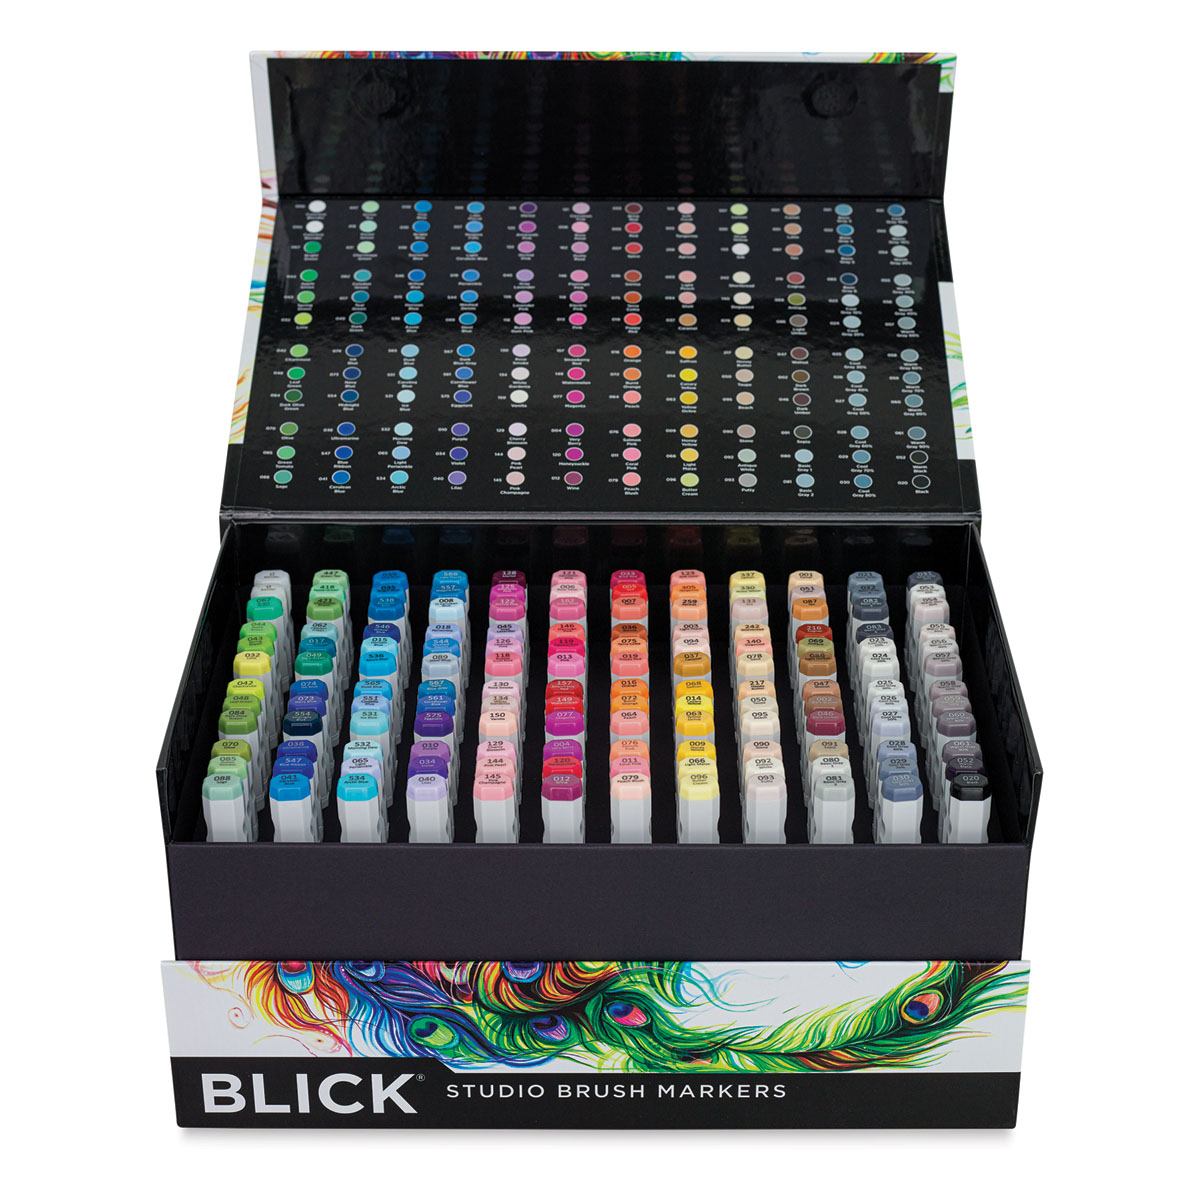 Blick Studio Brush Markers - Set of 144 | BLICK Art Materials